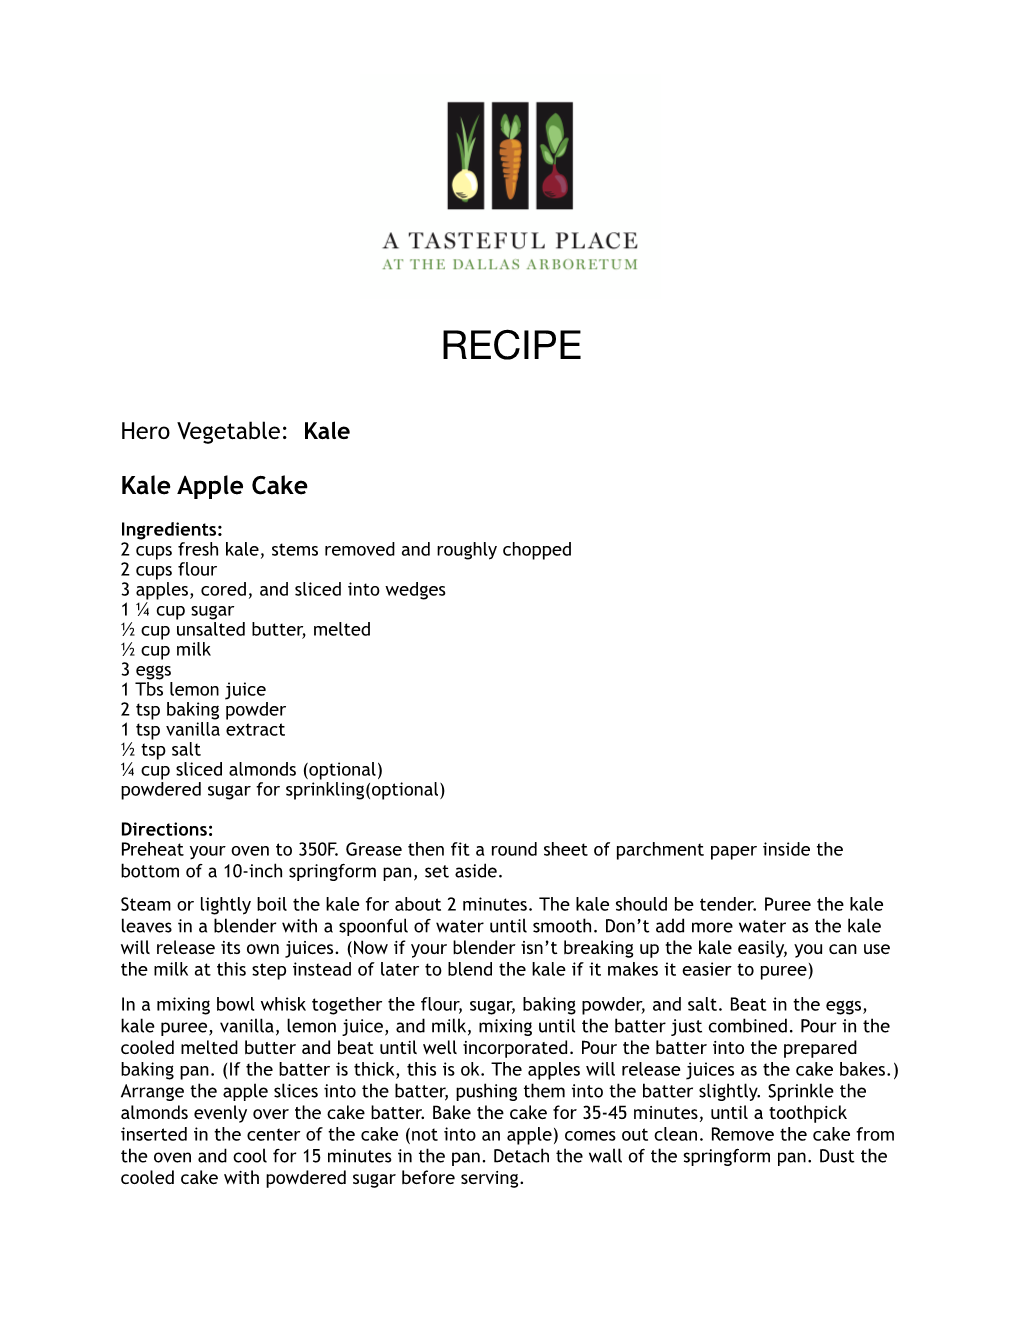 Kale Apple Cake